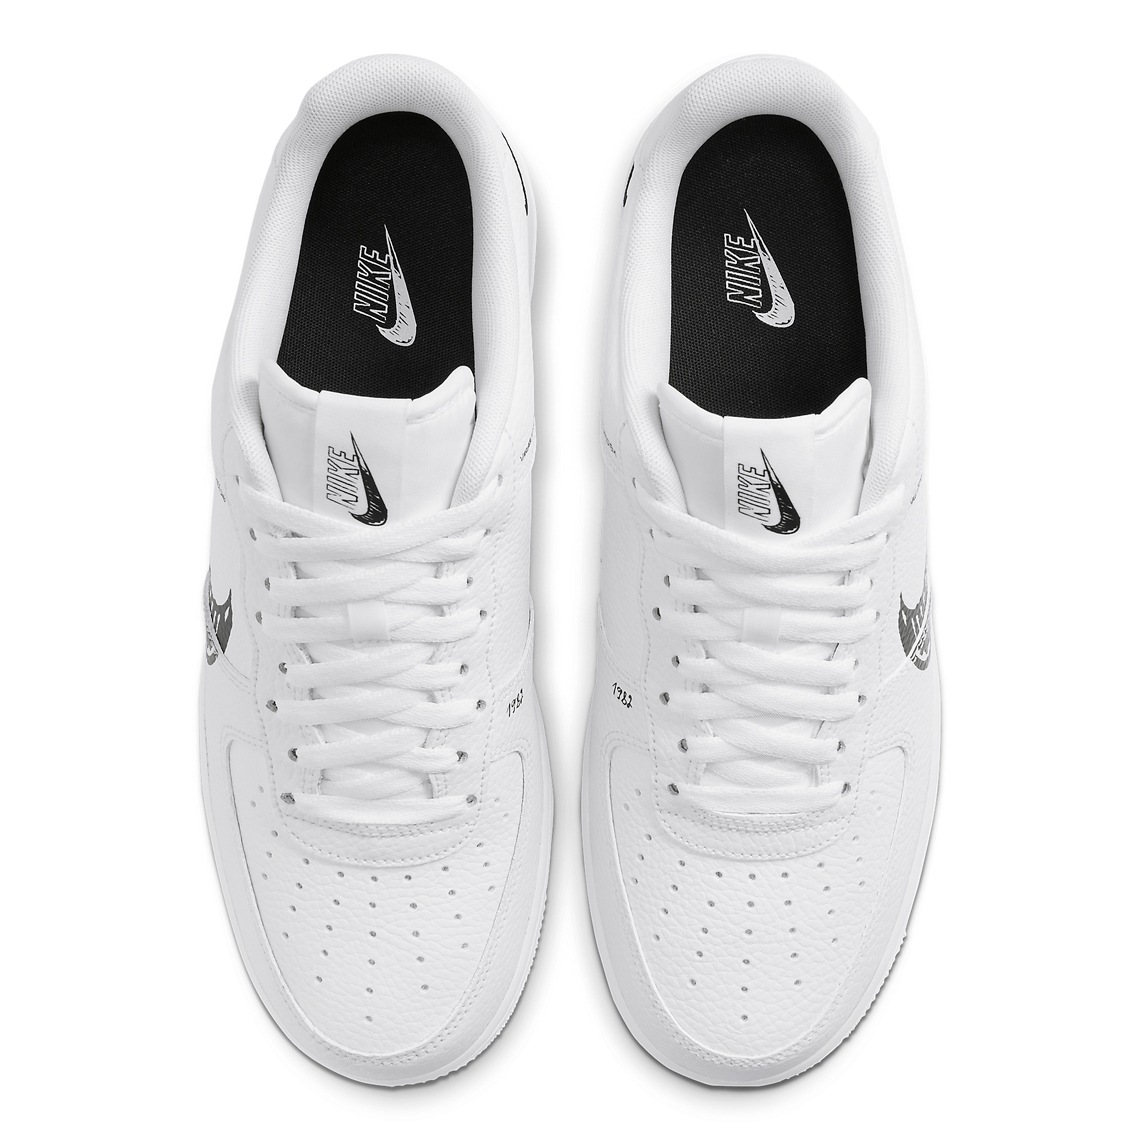 Nike Air Force 1 Low Sketch Pack Black CW7581-101 | SneakerNews.com